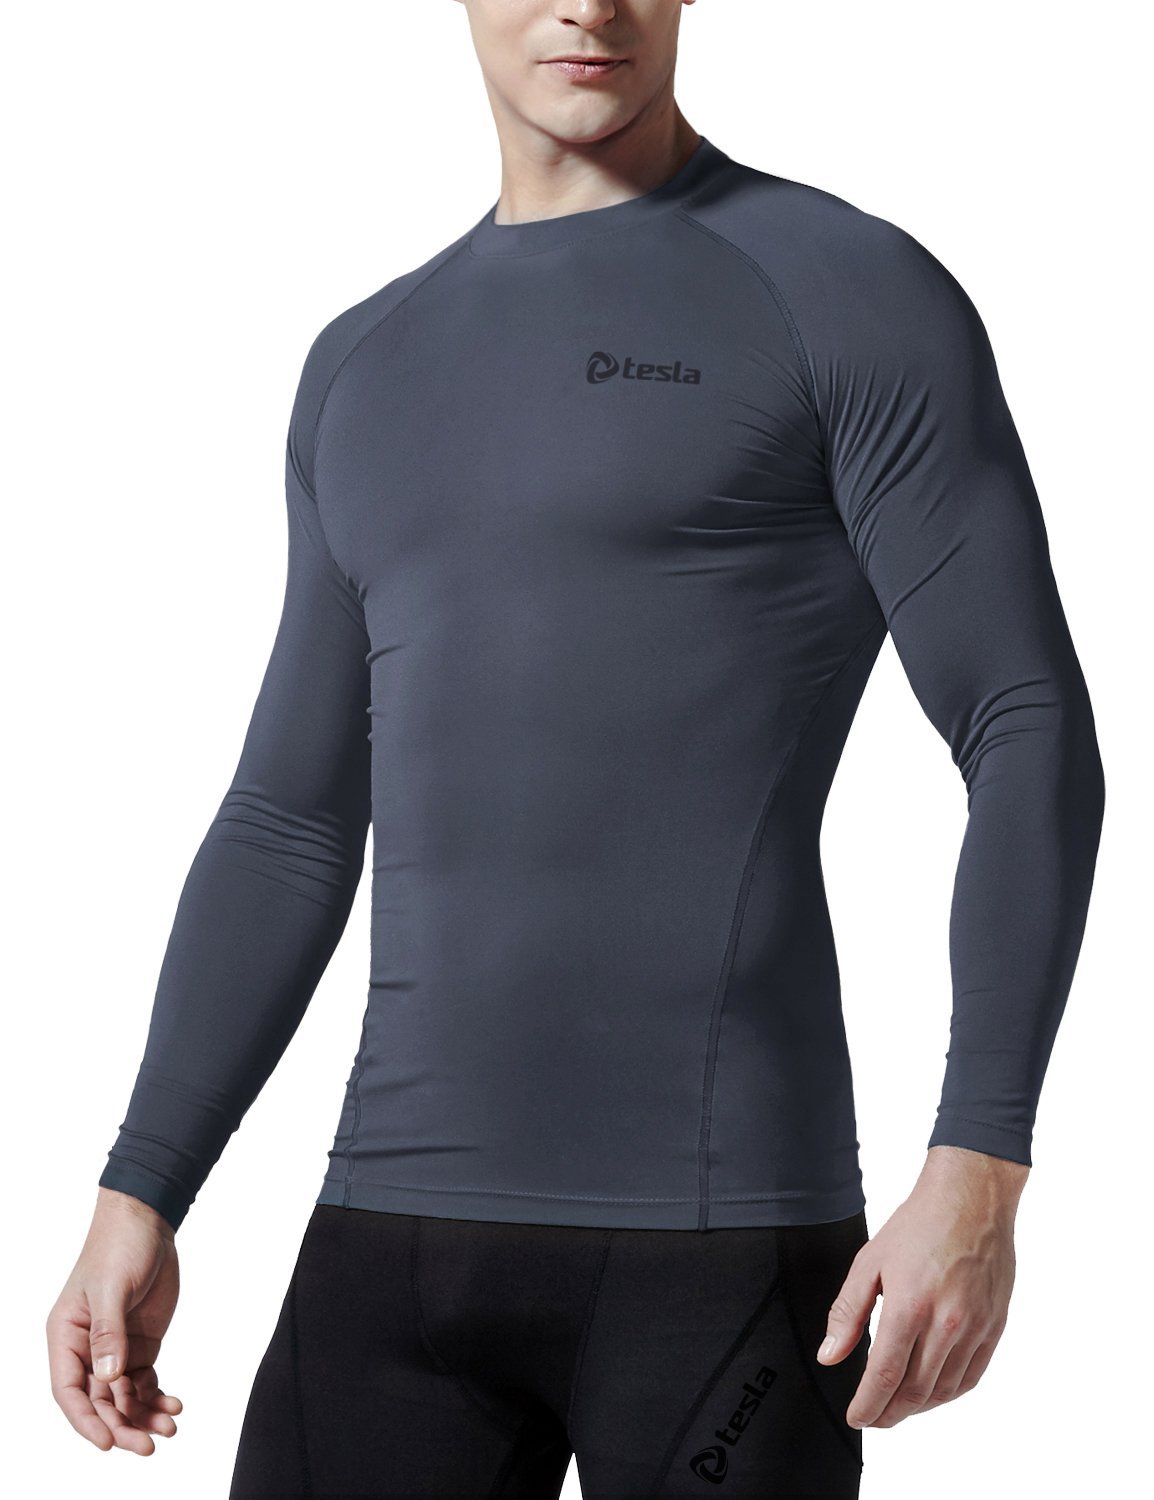 Men's Winter Thermal Baselayer Compression Shirt Long Sleeve Top Sweatshirt Hot